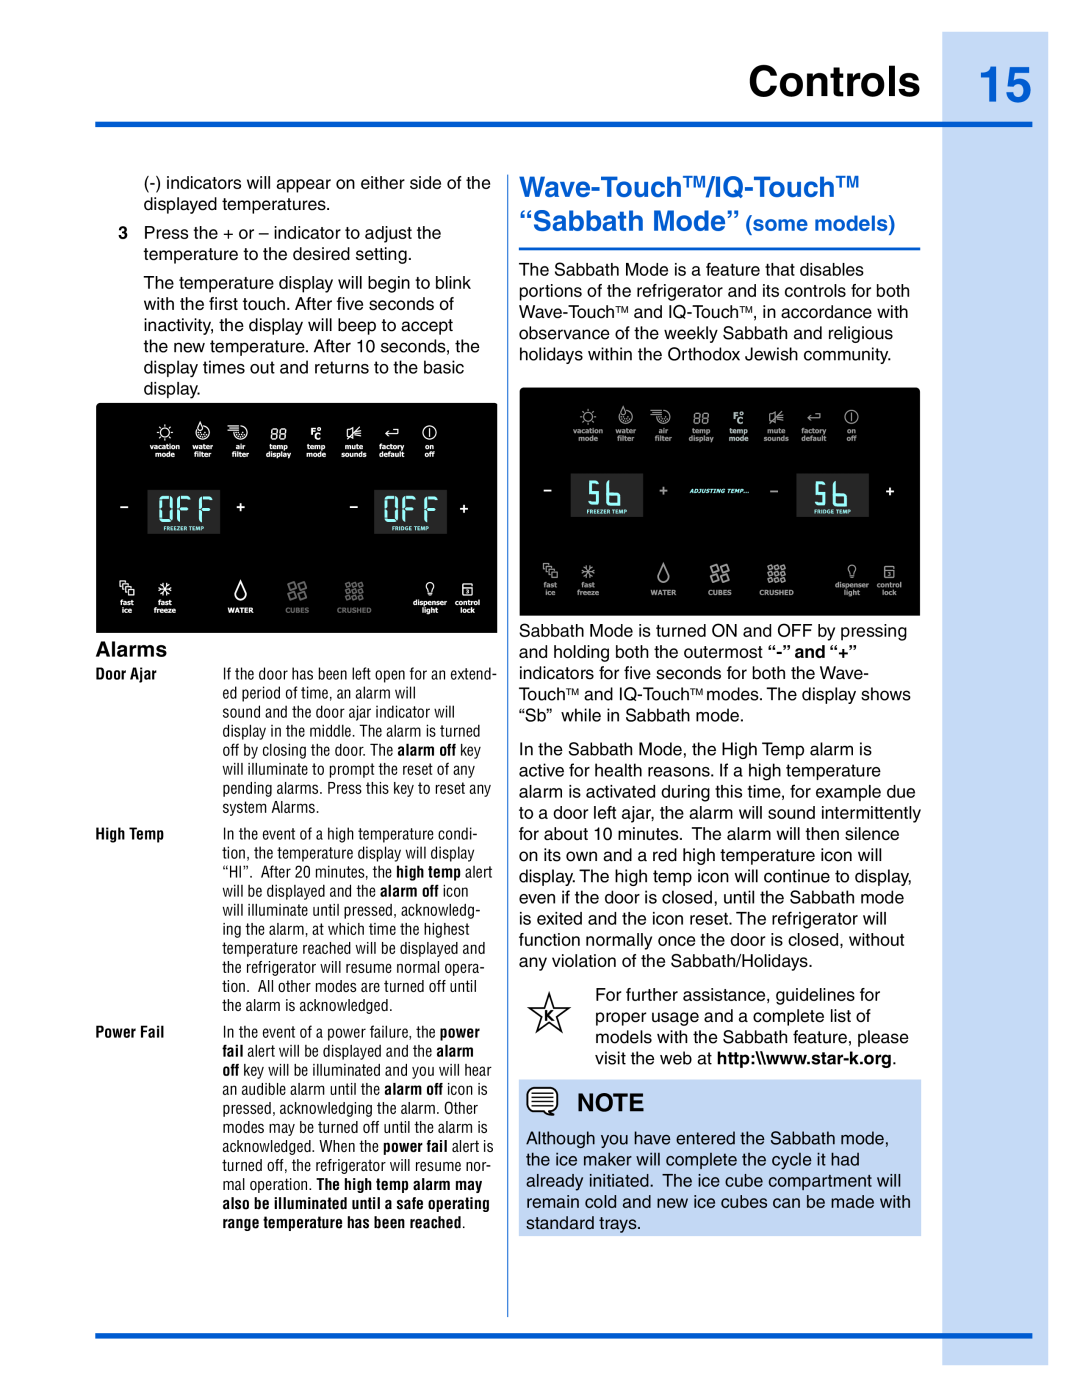 Electrolux 241868904 manual Wave-TouchTM/IQ-TouchTM “Sabbath Mode” some models, Alarms, Controls 